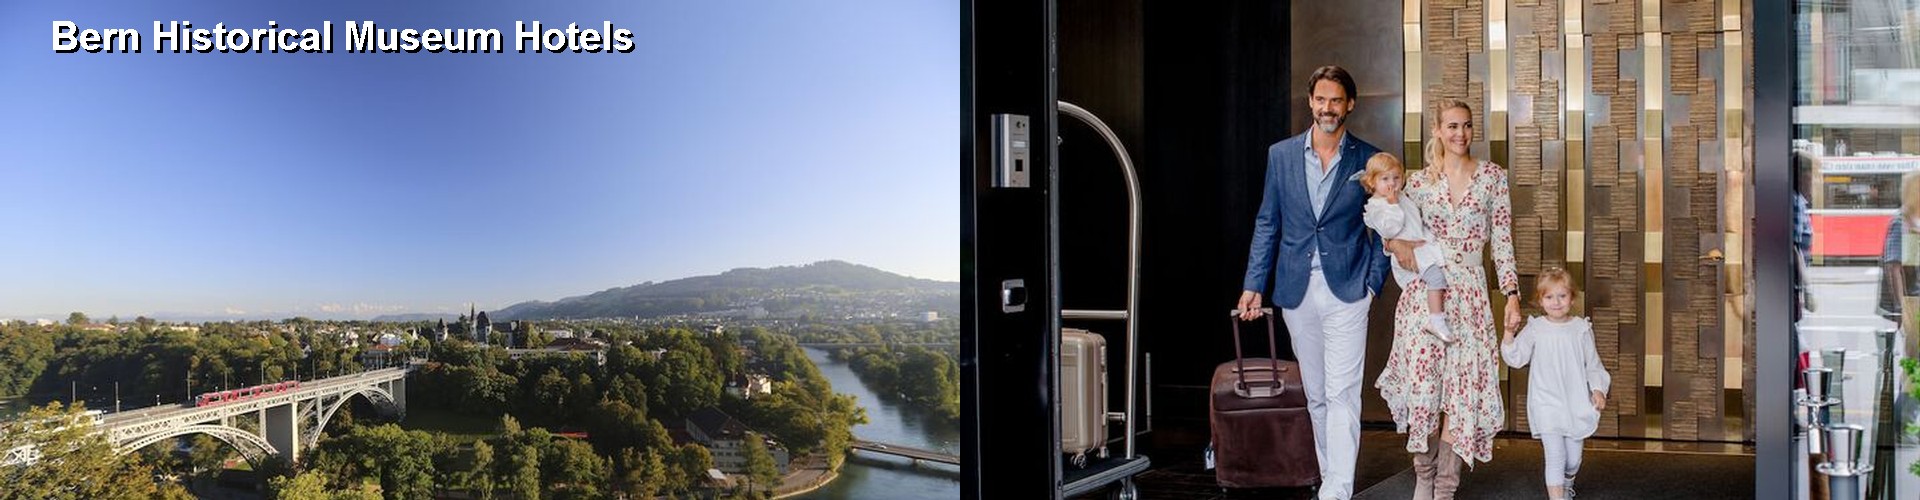 5 Best Hotels near Bern Historical Museum